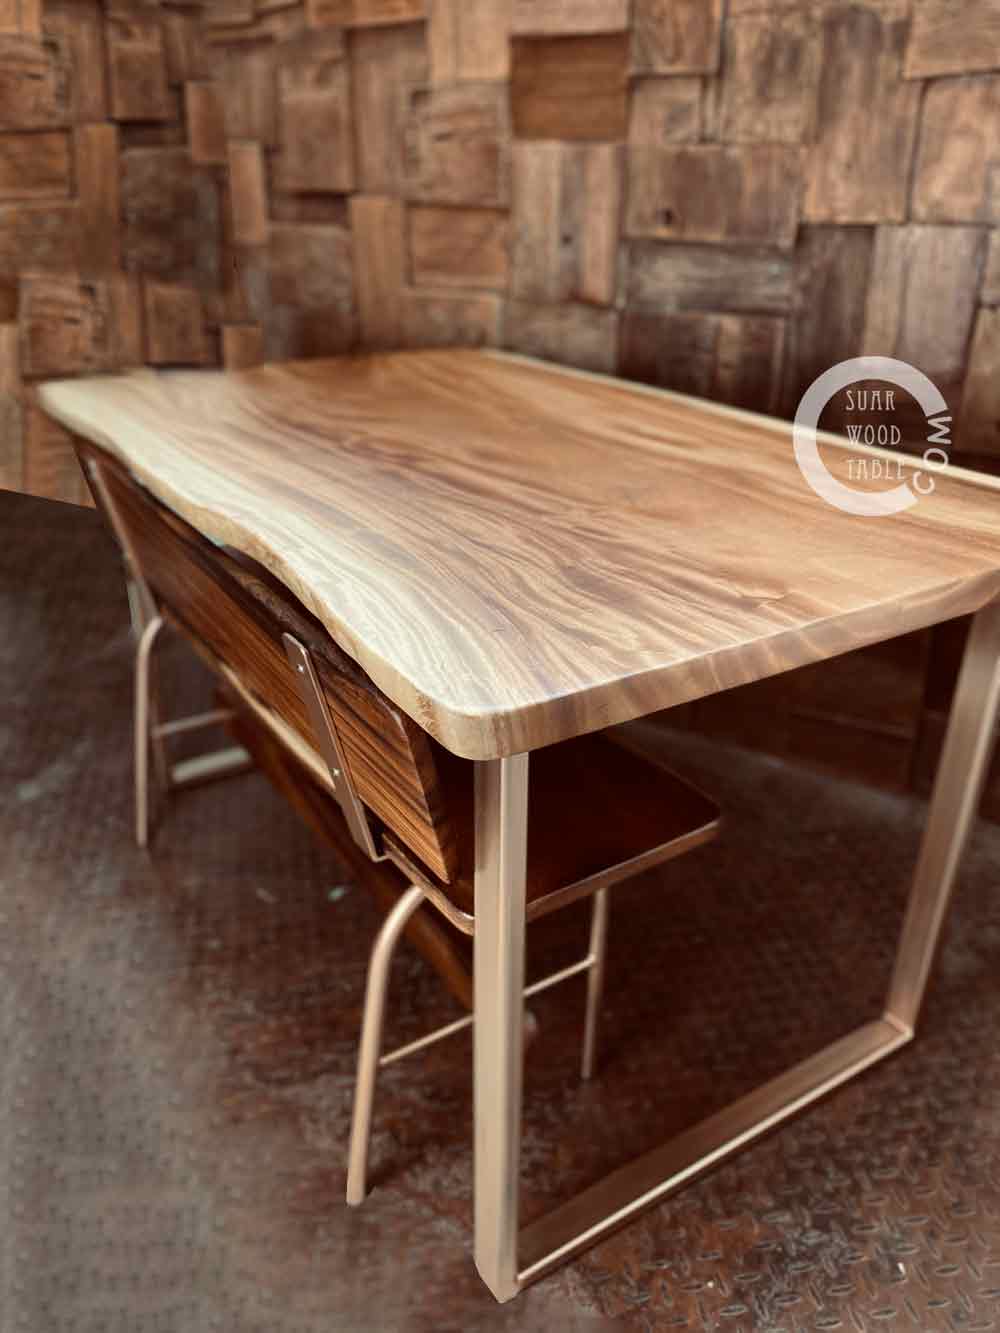 suar wood table singapore